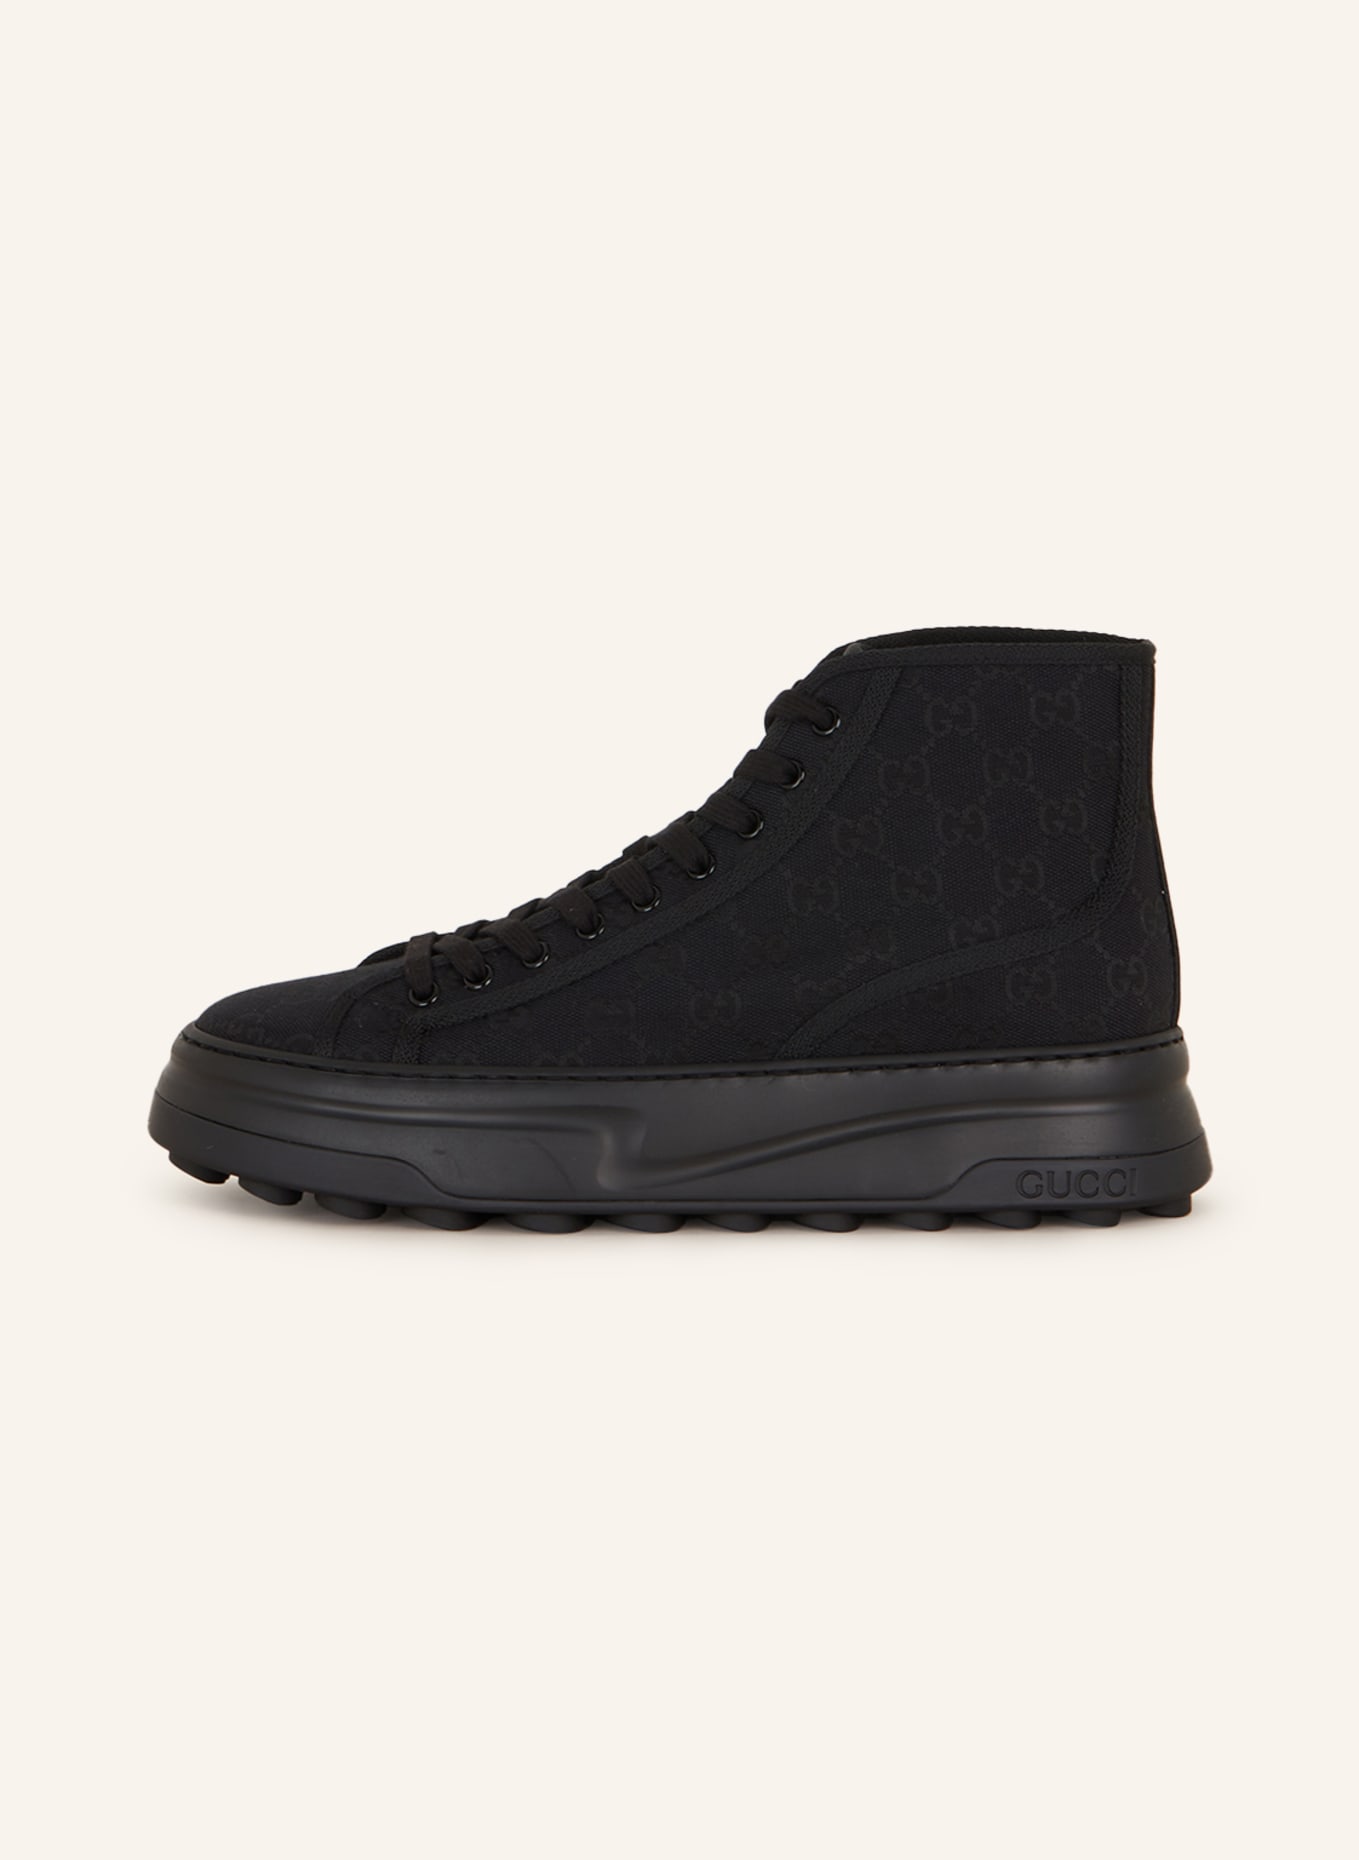 GUCCI Hightop-Sneaker, Farbe: 1000 BLACK/BLACK (Bild 4)